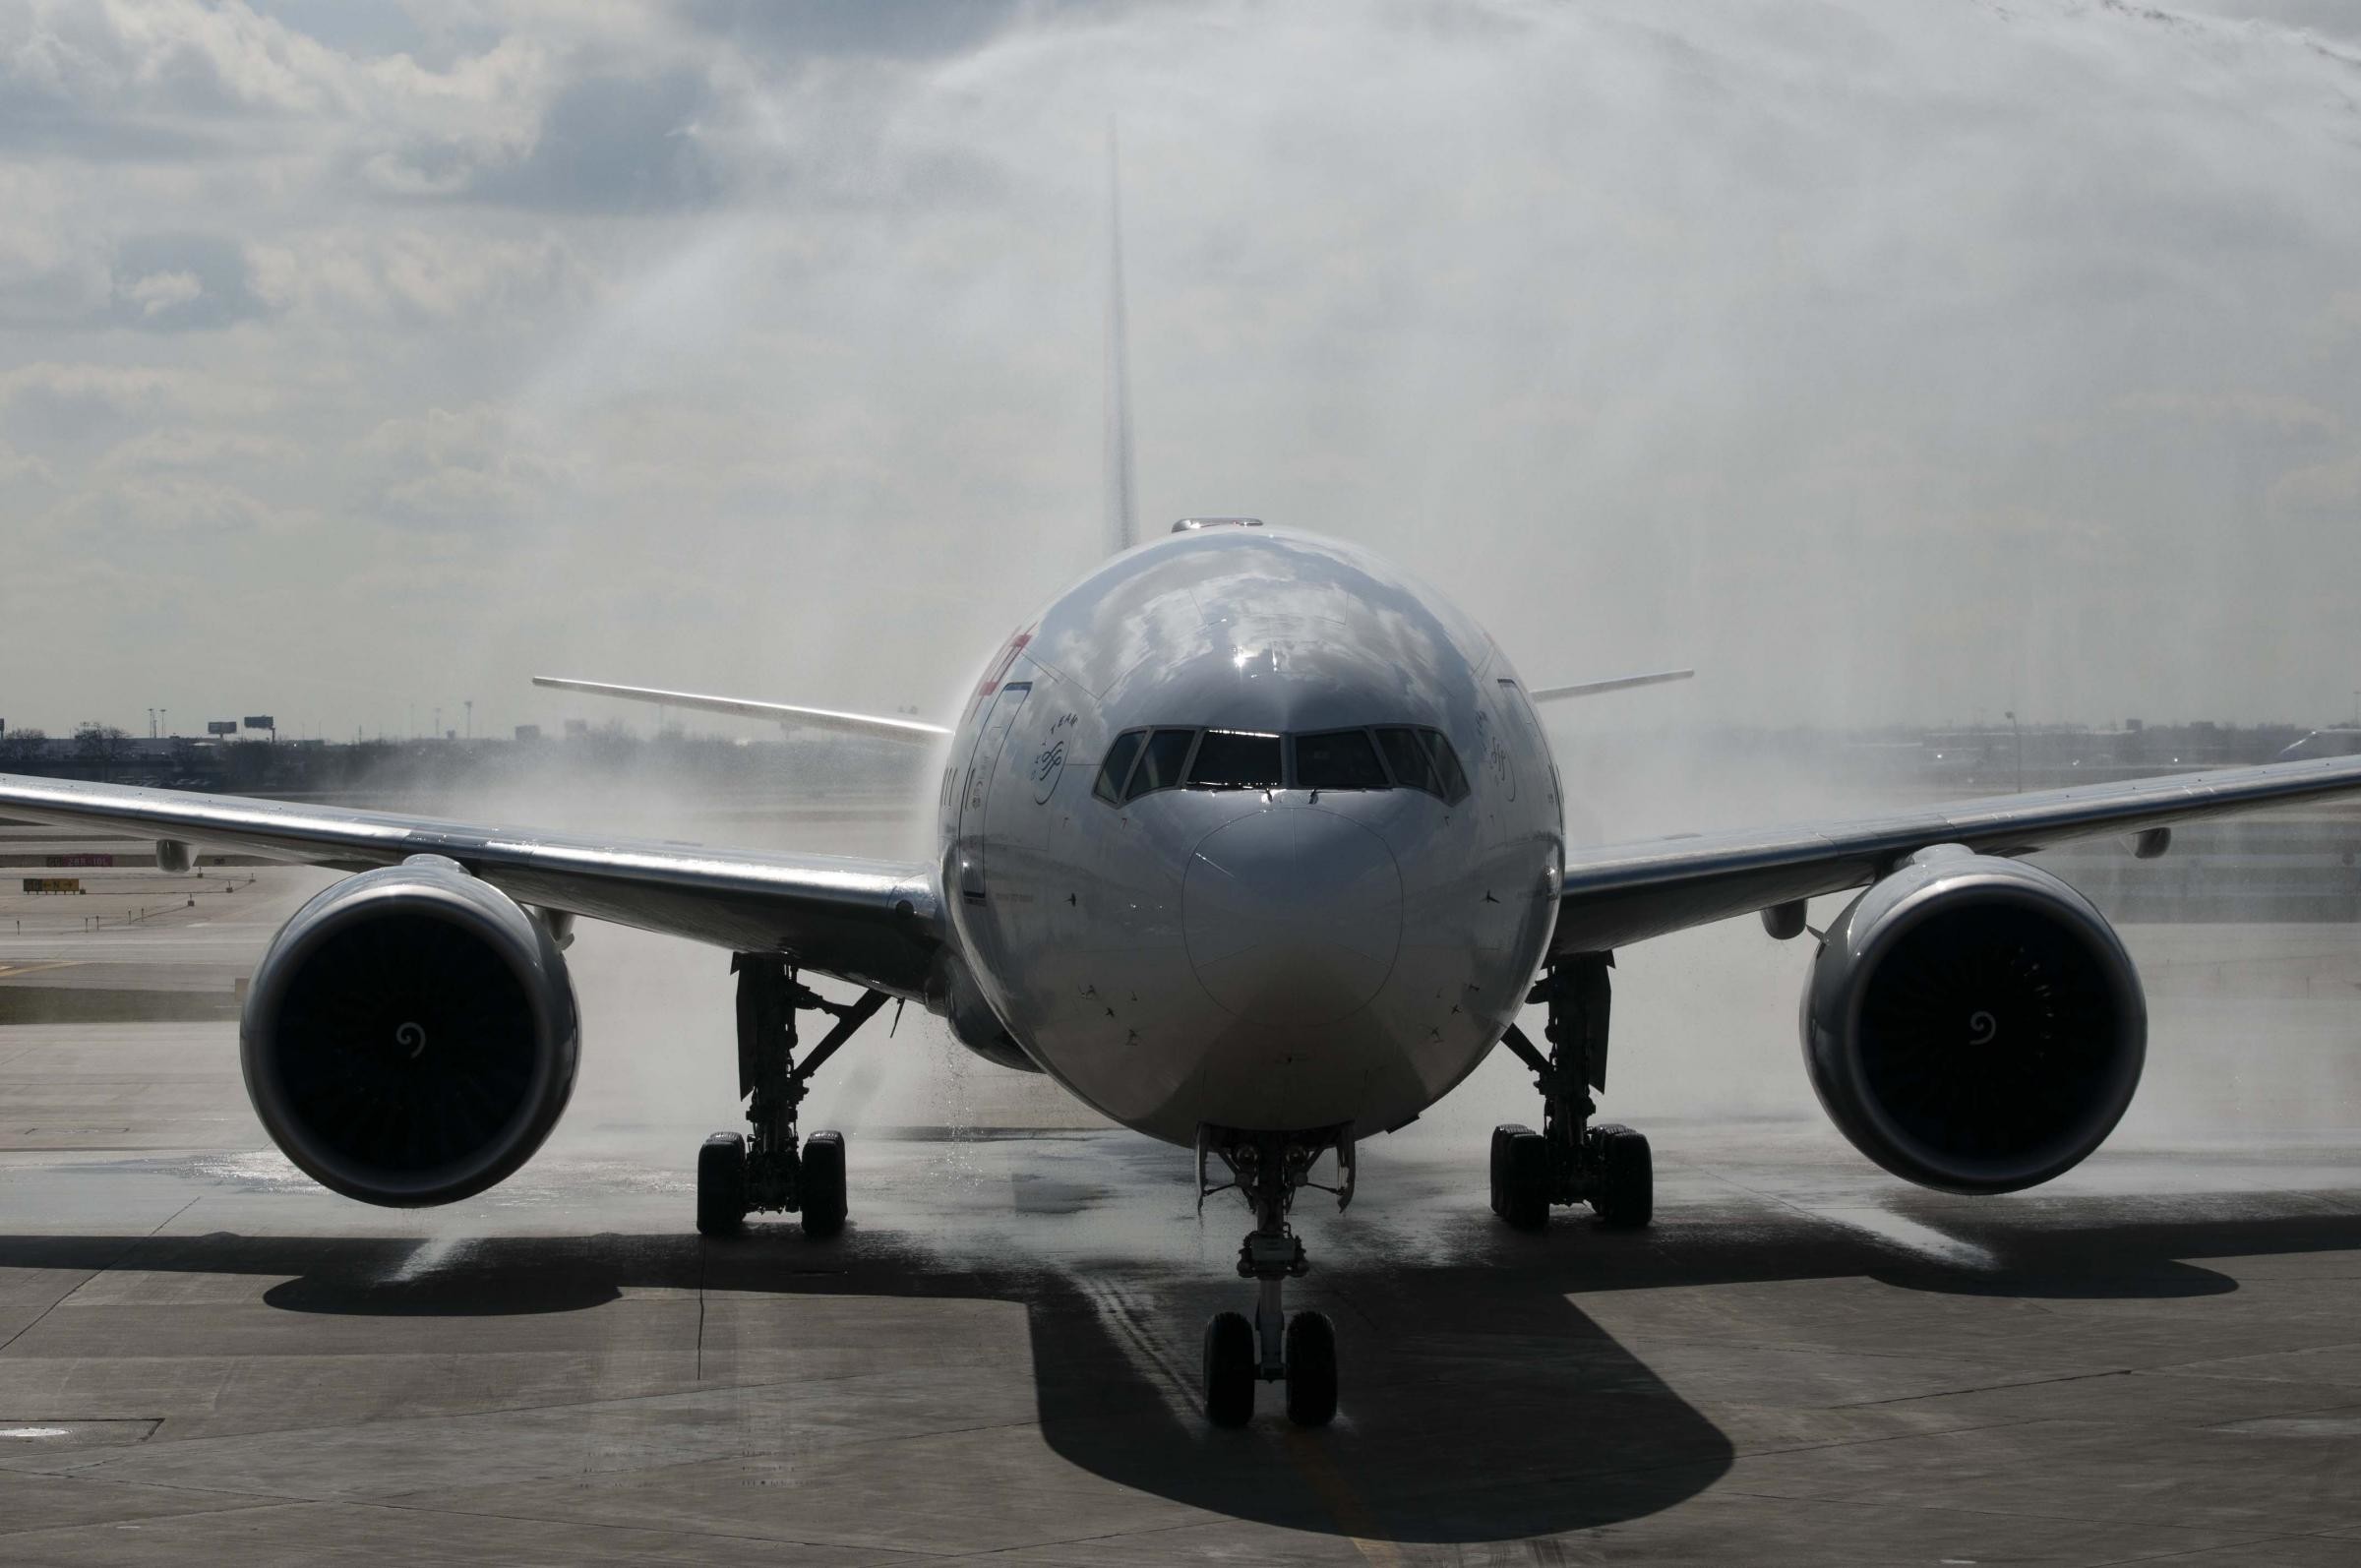 Turbolenze in volo, trenta feriti sul Boeing Turkish Airlines